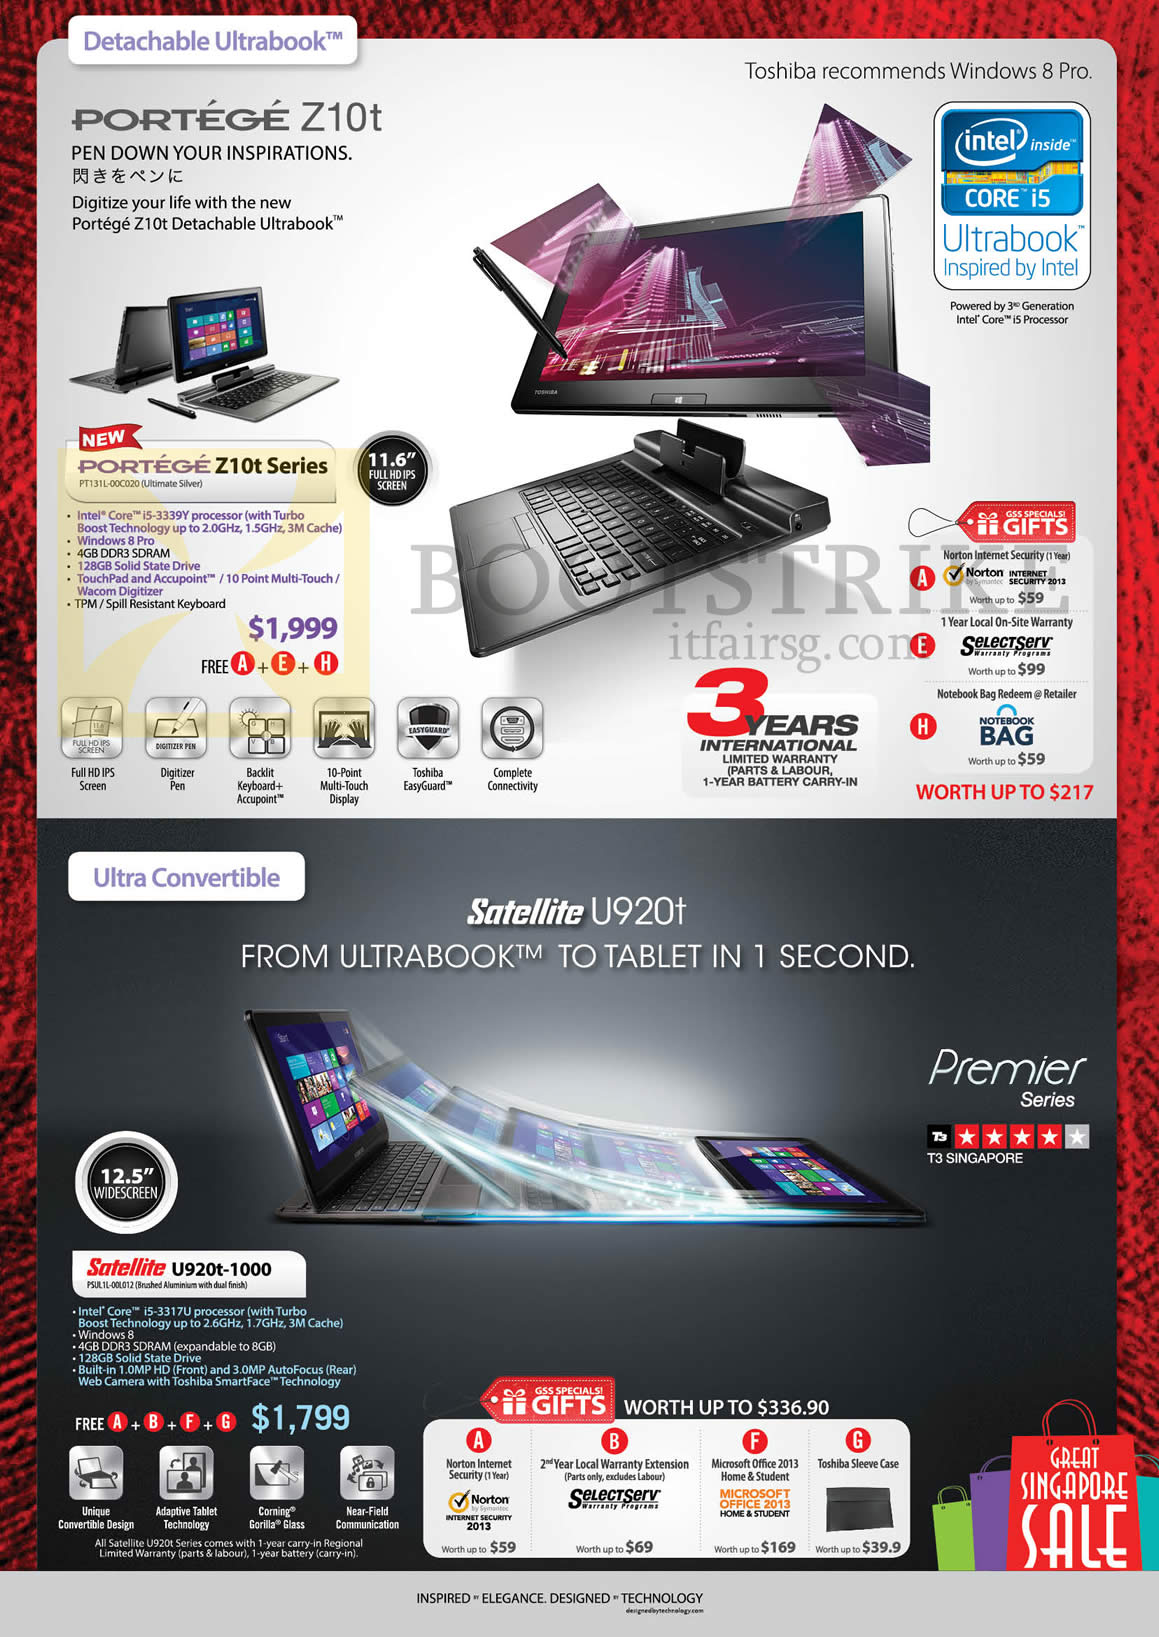 PC SHOW 2013 price list image brochure of Toshiba Notebooks Portege Z10t, U920t-1000